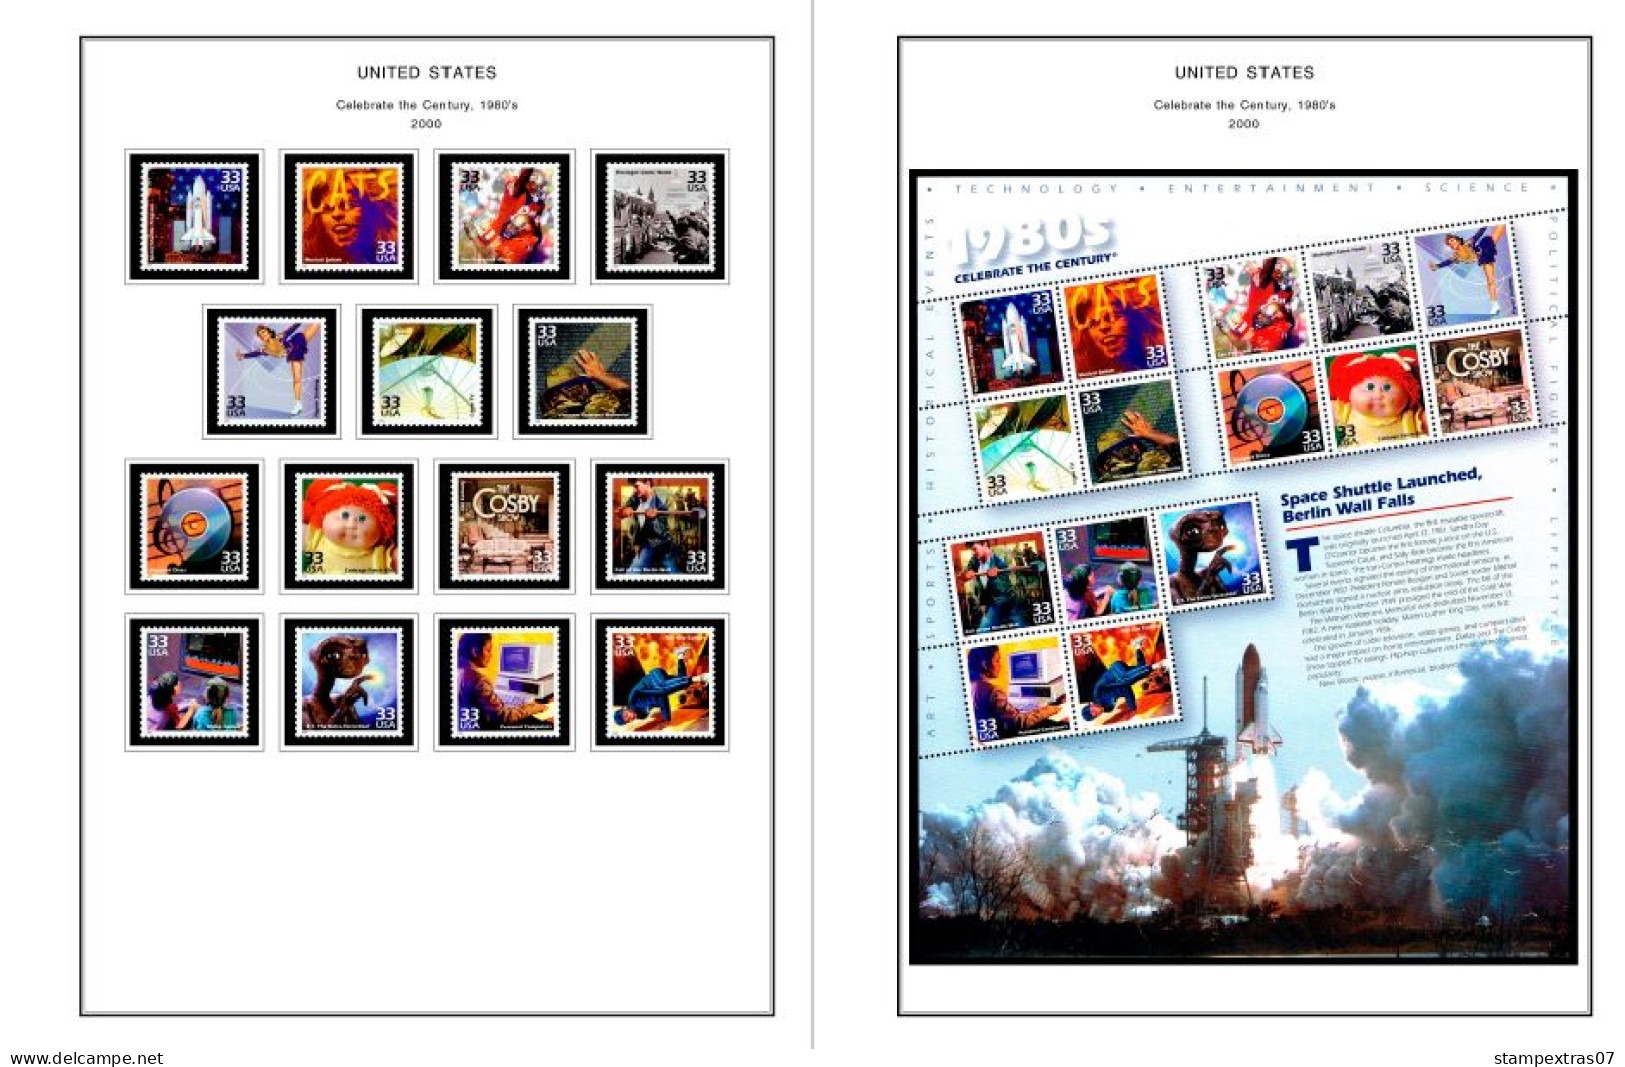 COLOR PRINTED USA 2000-2004 STAMP ALBUM PAGES (88 Illustrated Pages) >> FEUILLES ALBUM - Fogli Prestampati